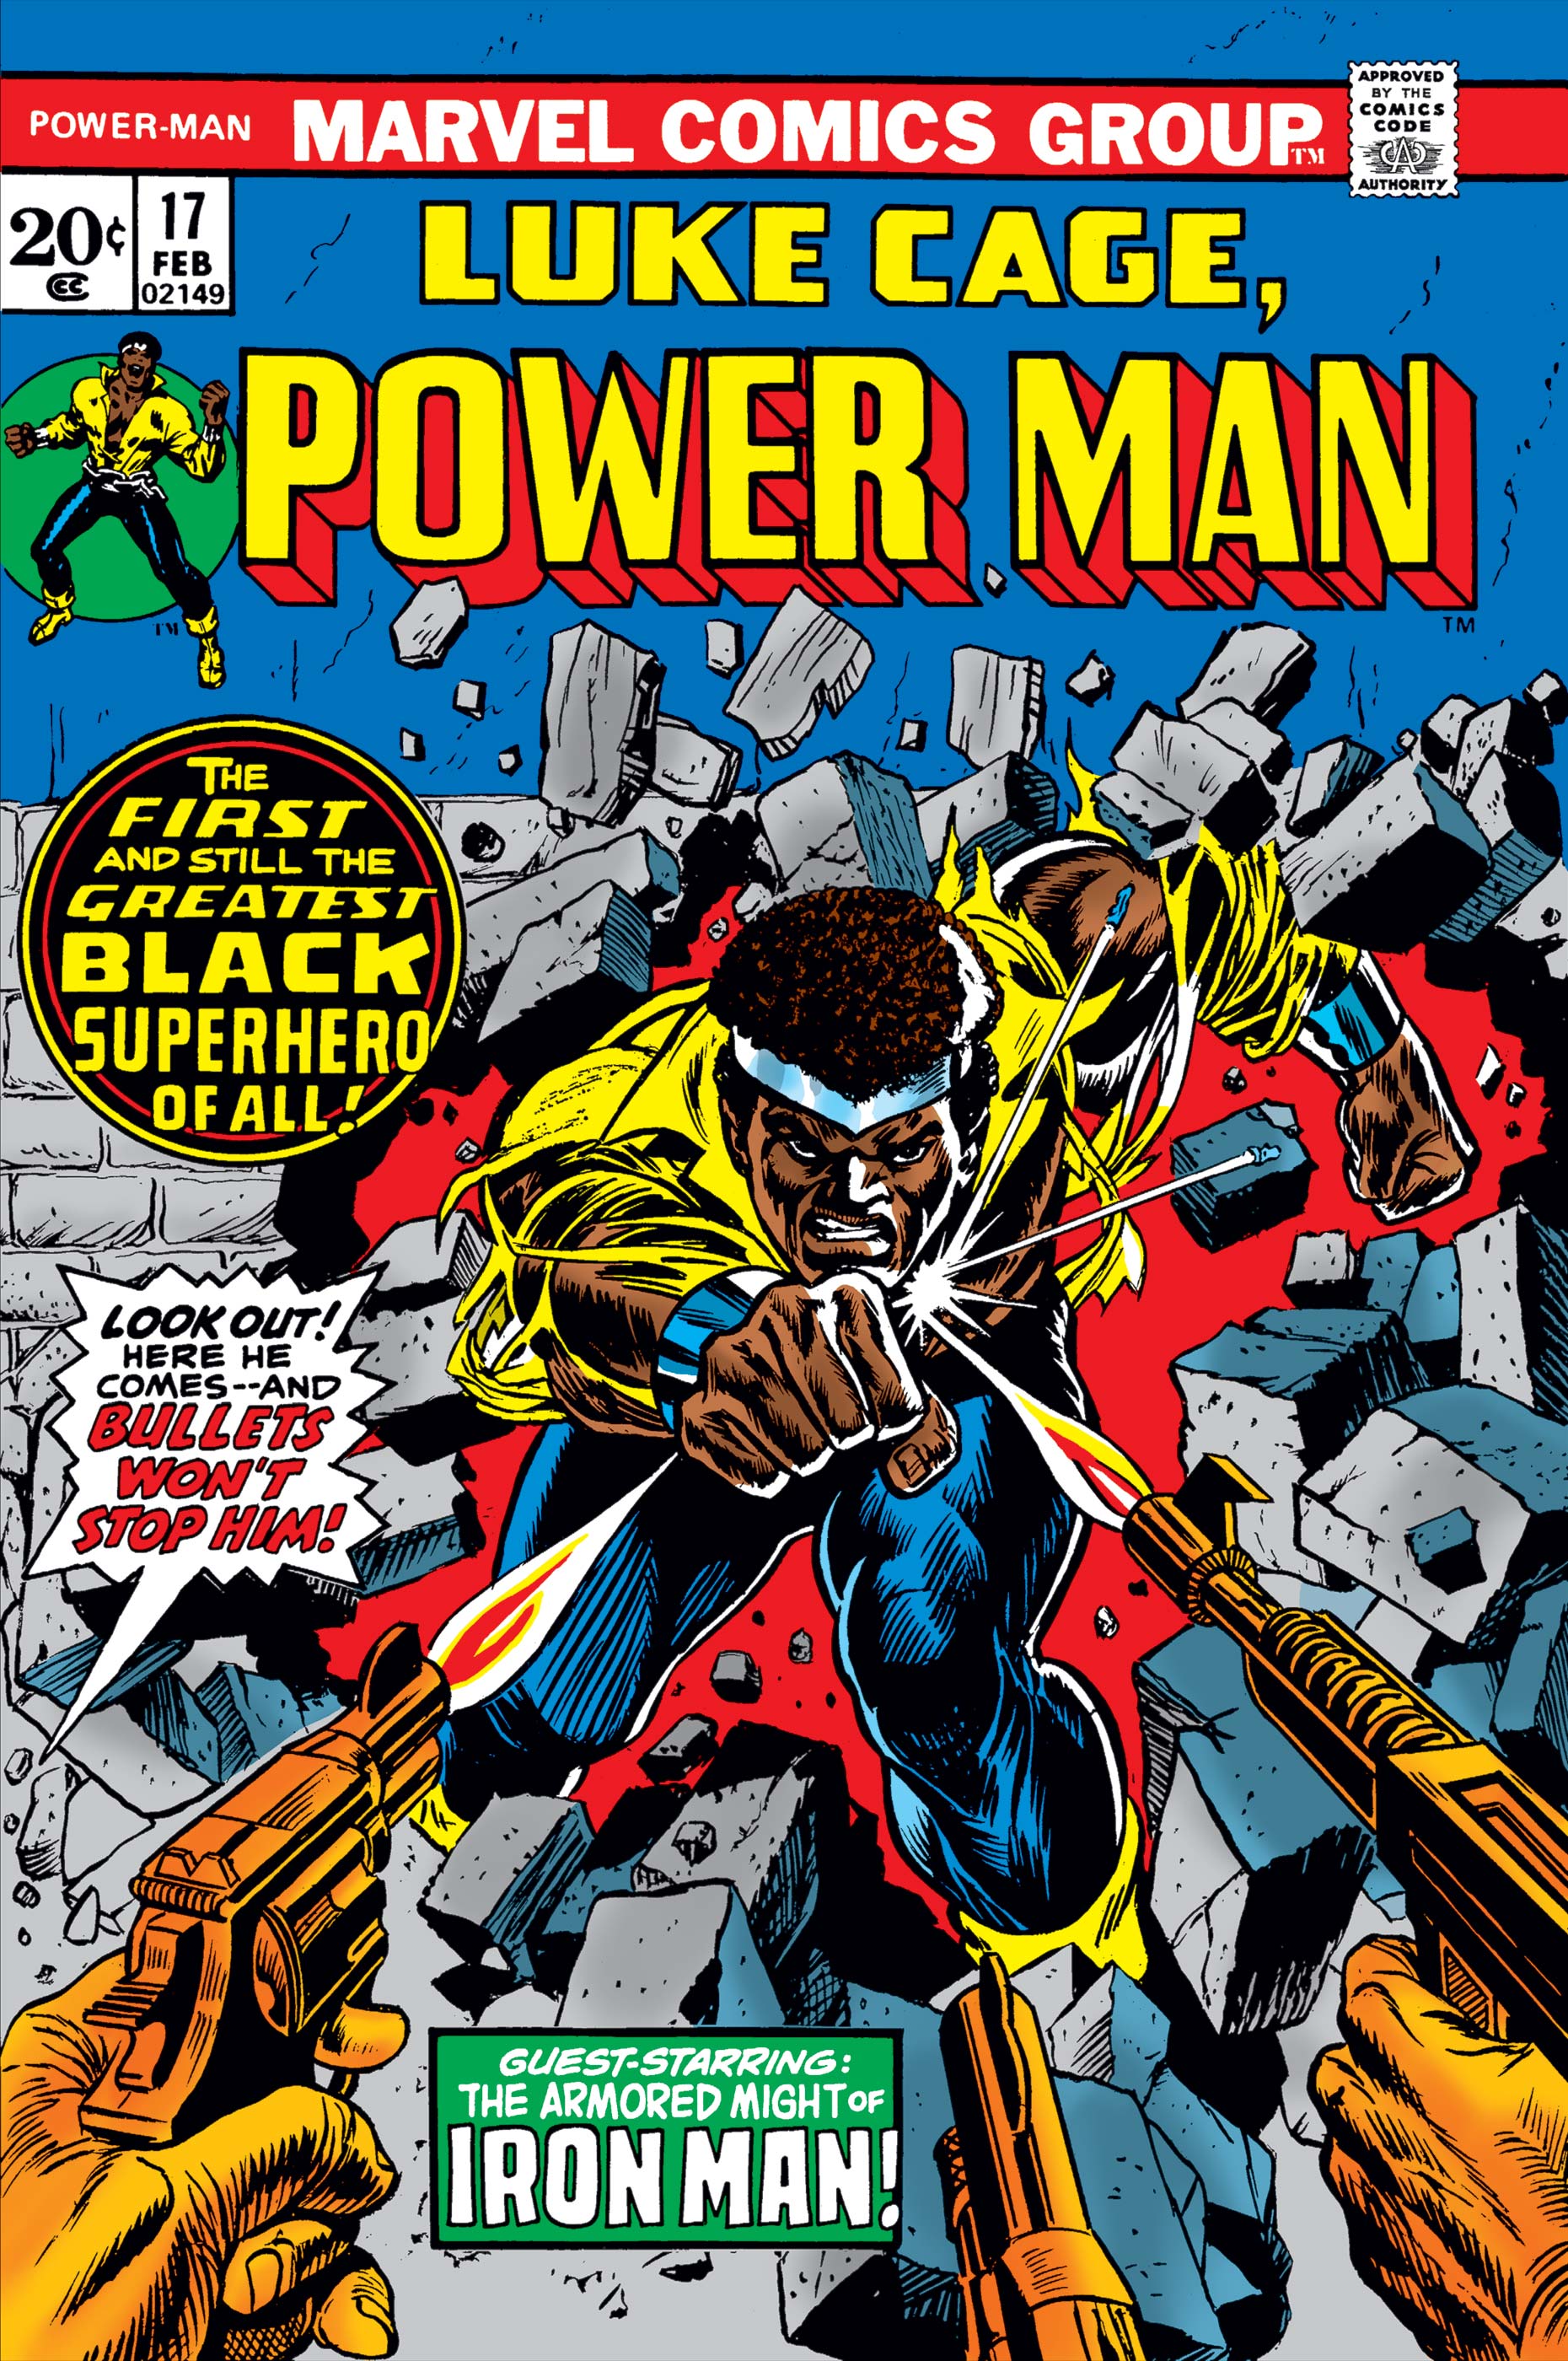 Power Man (1974) #17